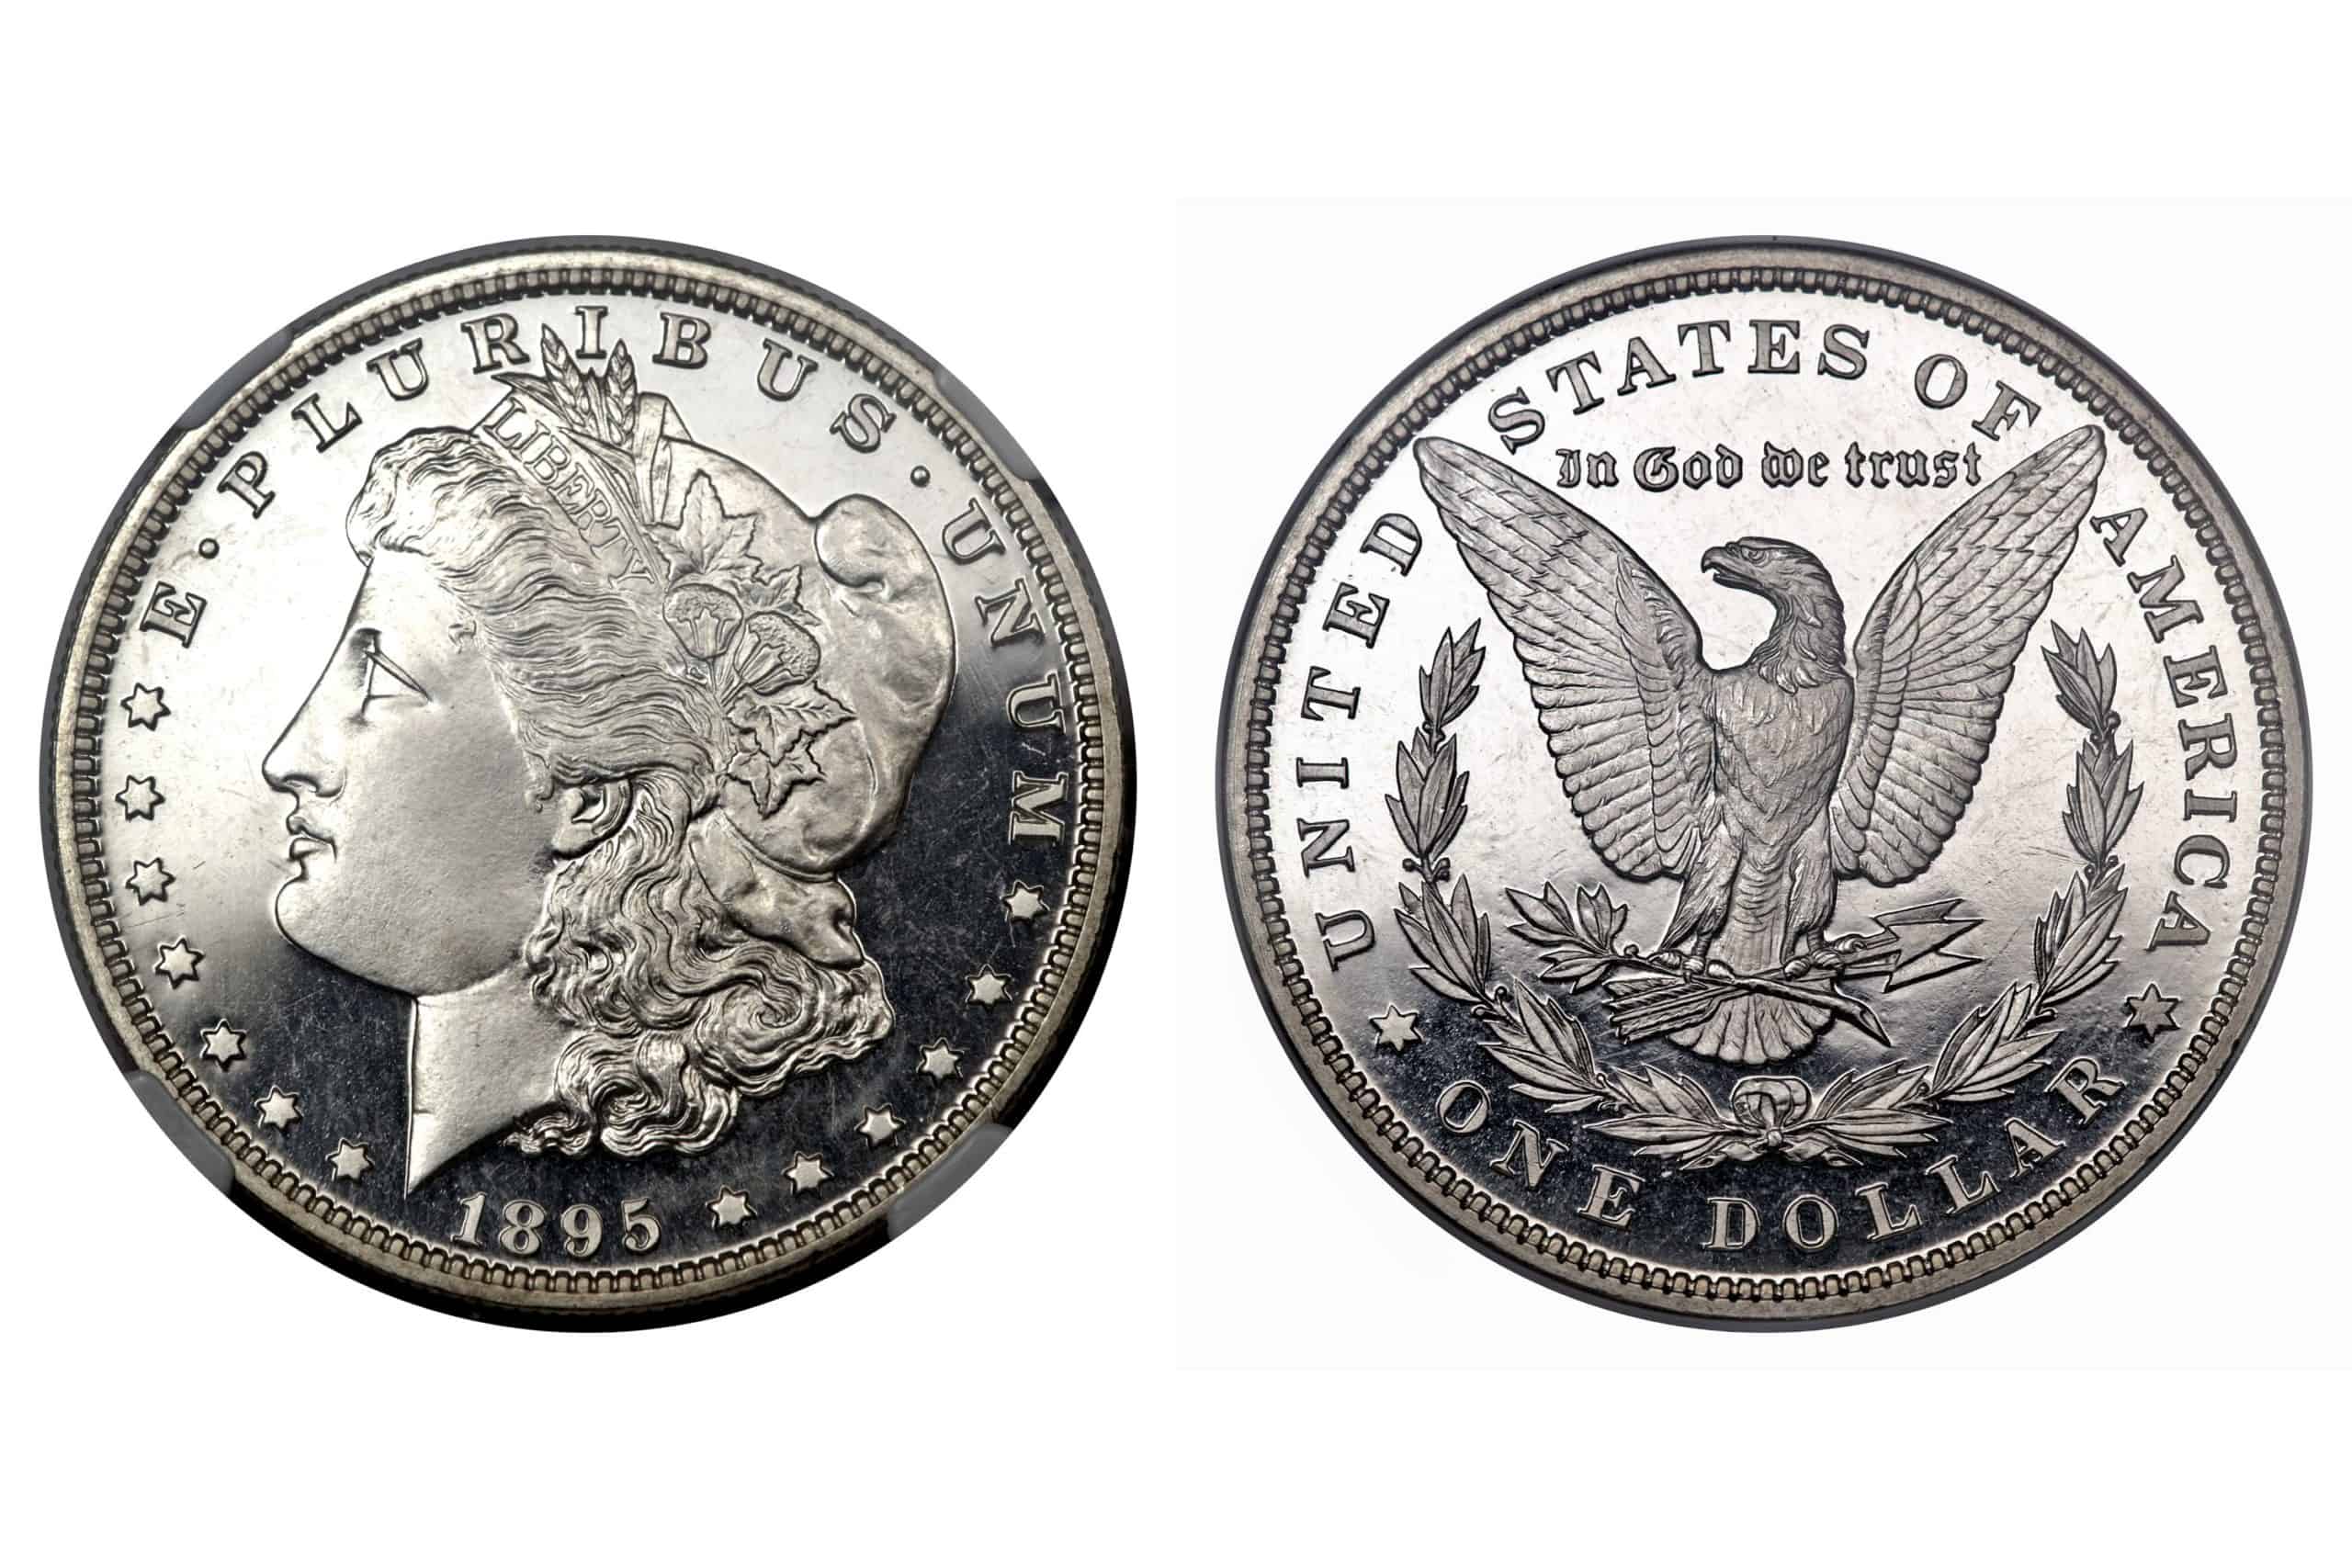 1895 Morgan silver dollar